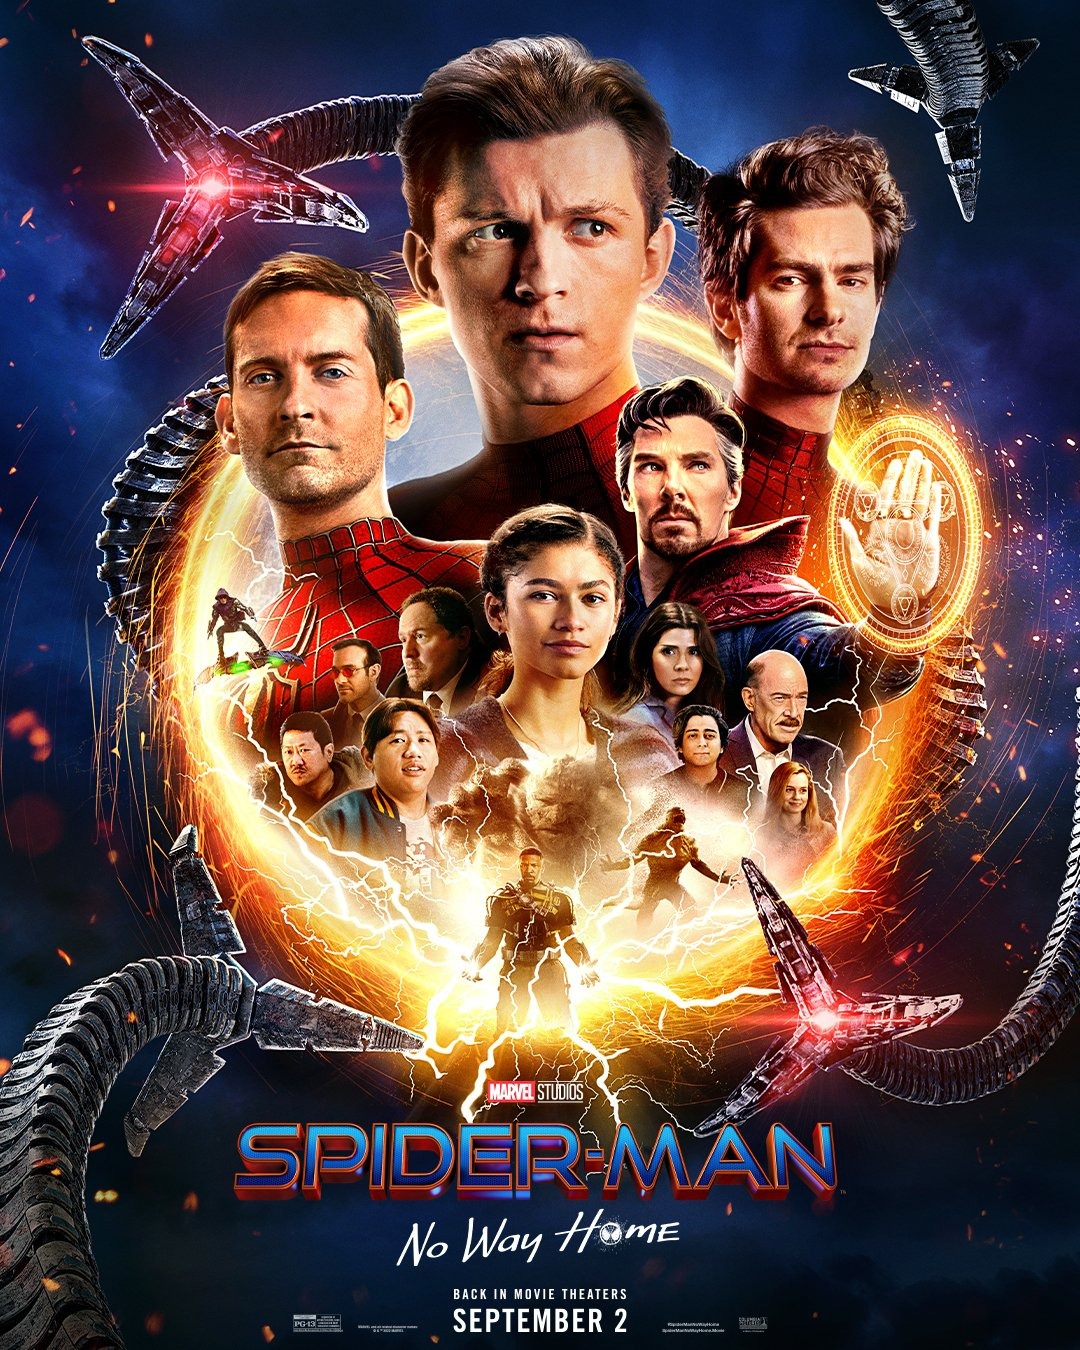 Spider-Man : No Way Home - Version longue streaming vf gratuit